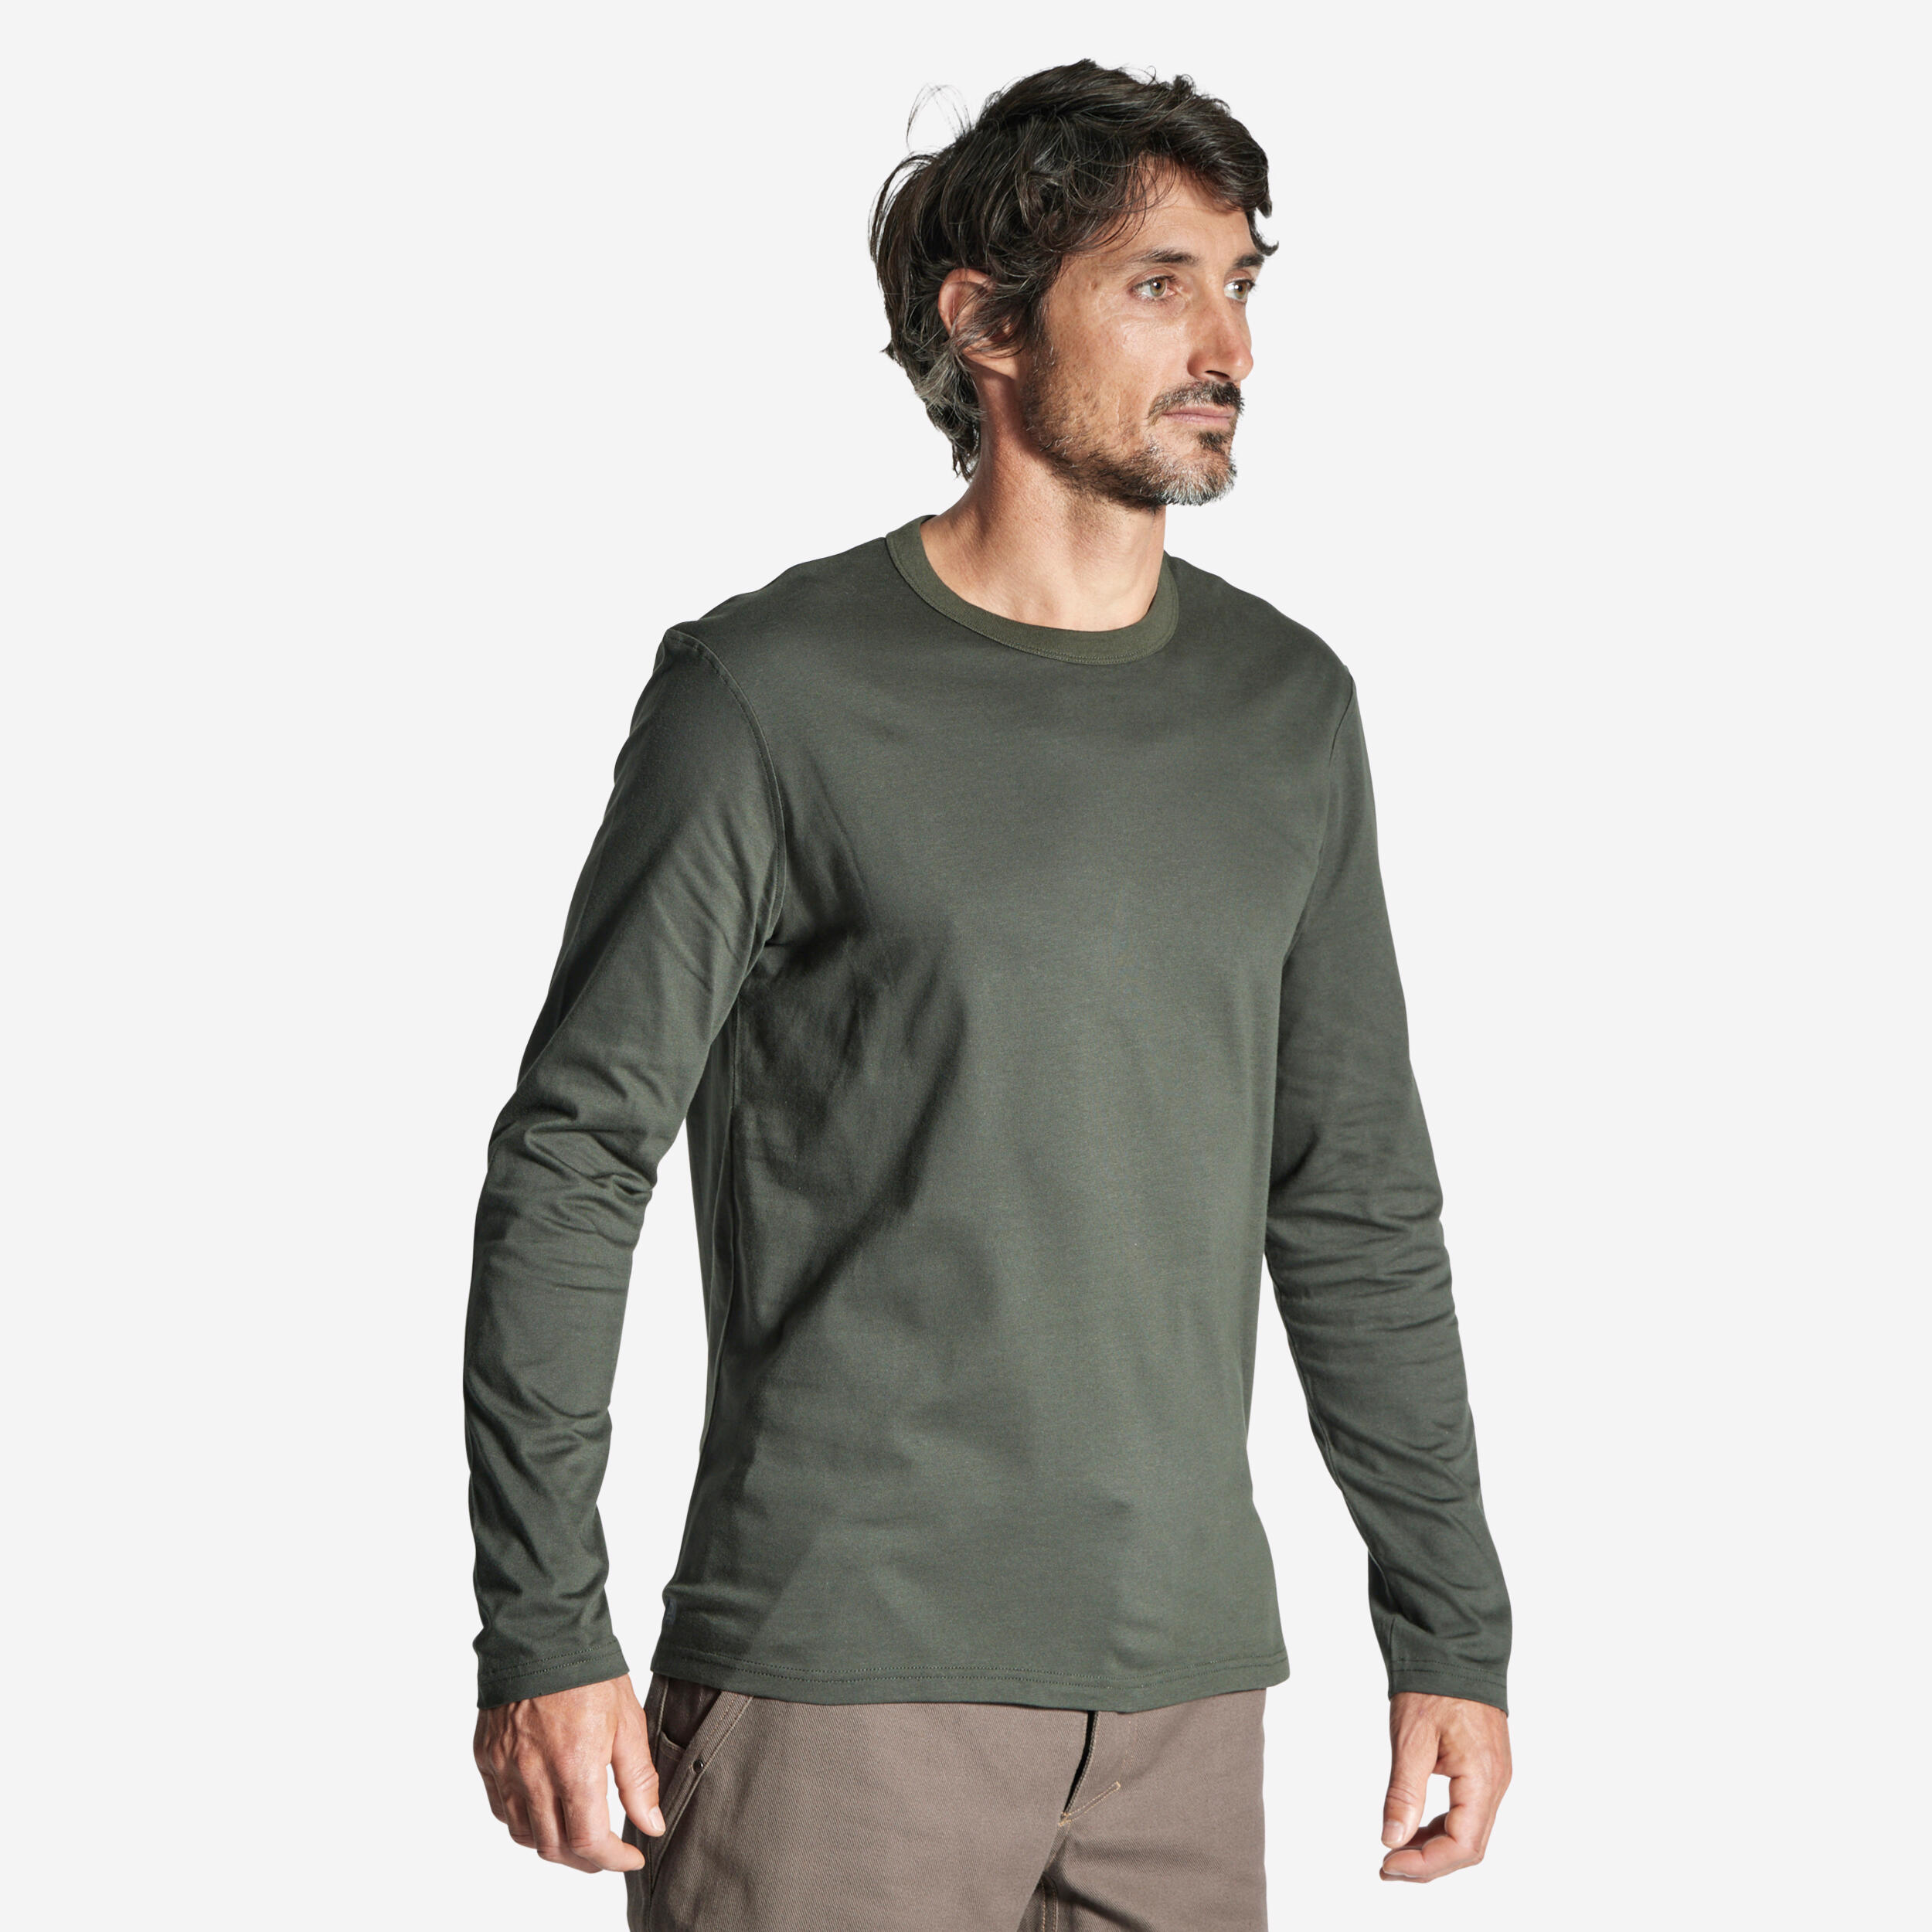 Comfortable, Quality Carp Fishing T-Shirts & Tops